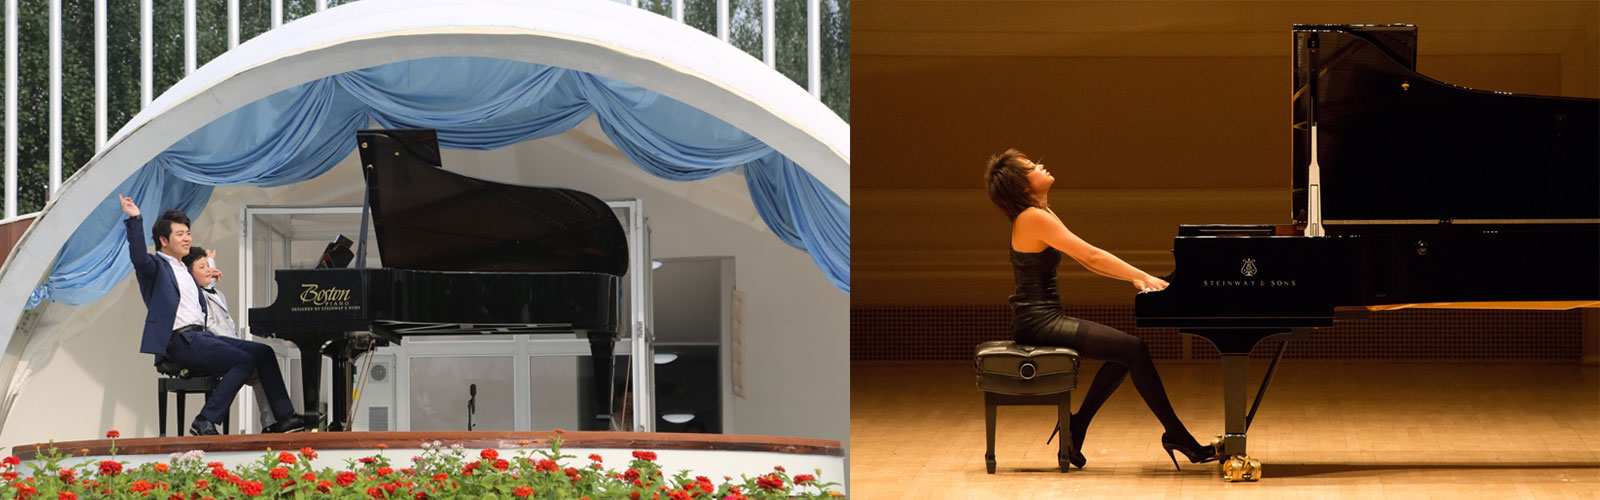 Steinway Piano Event Rentals